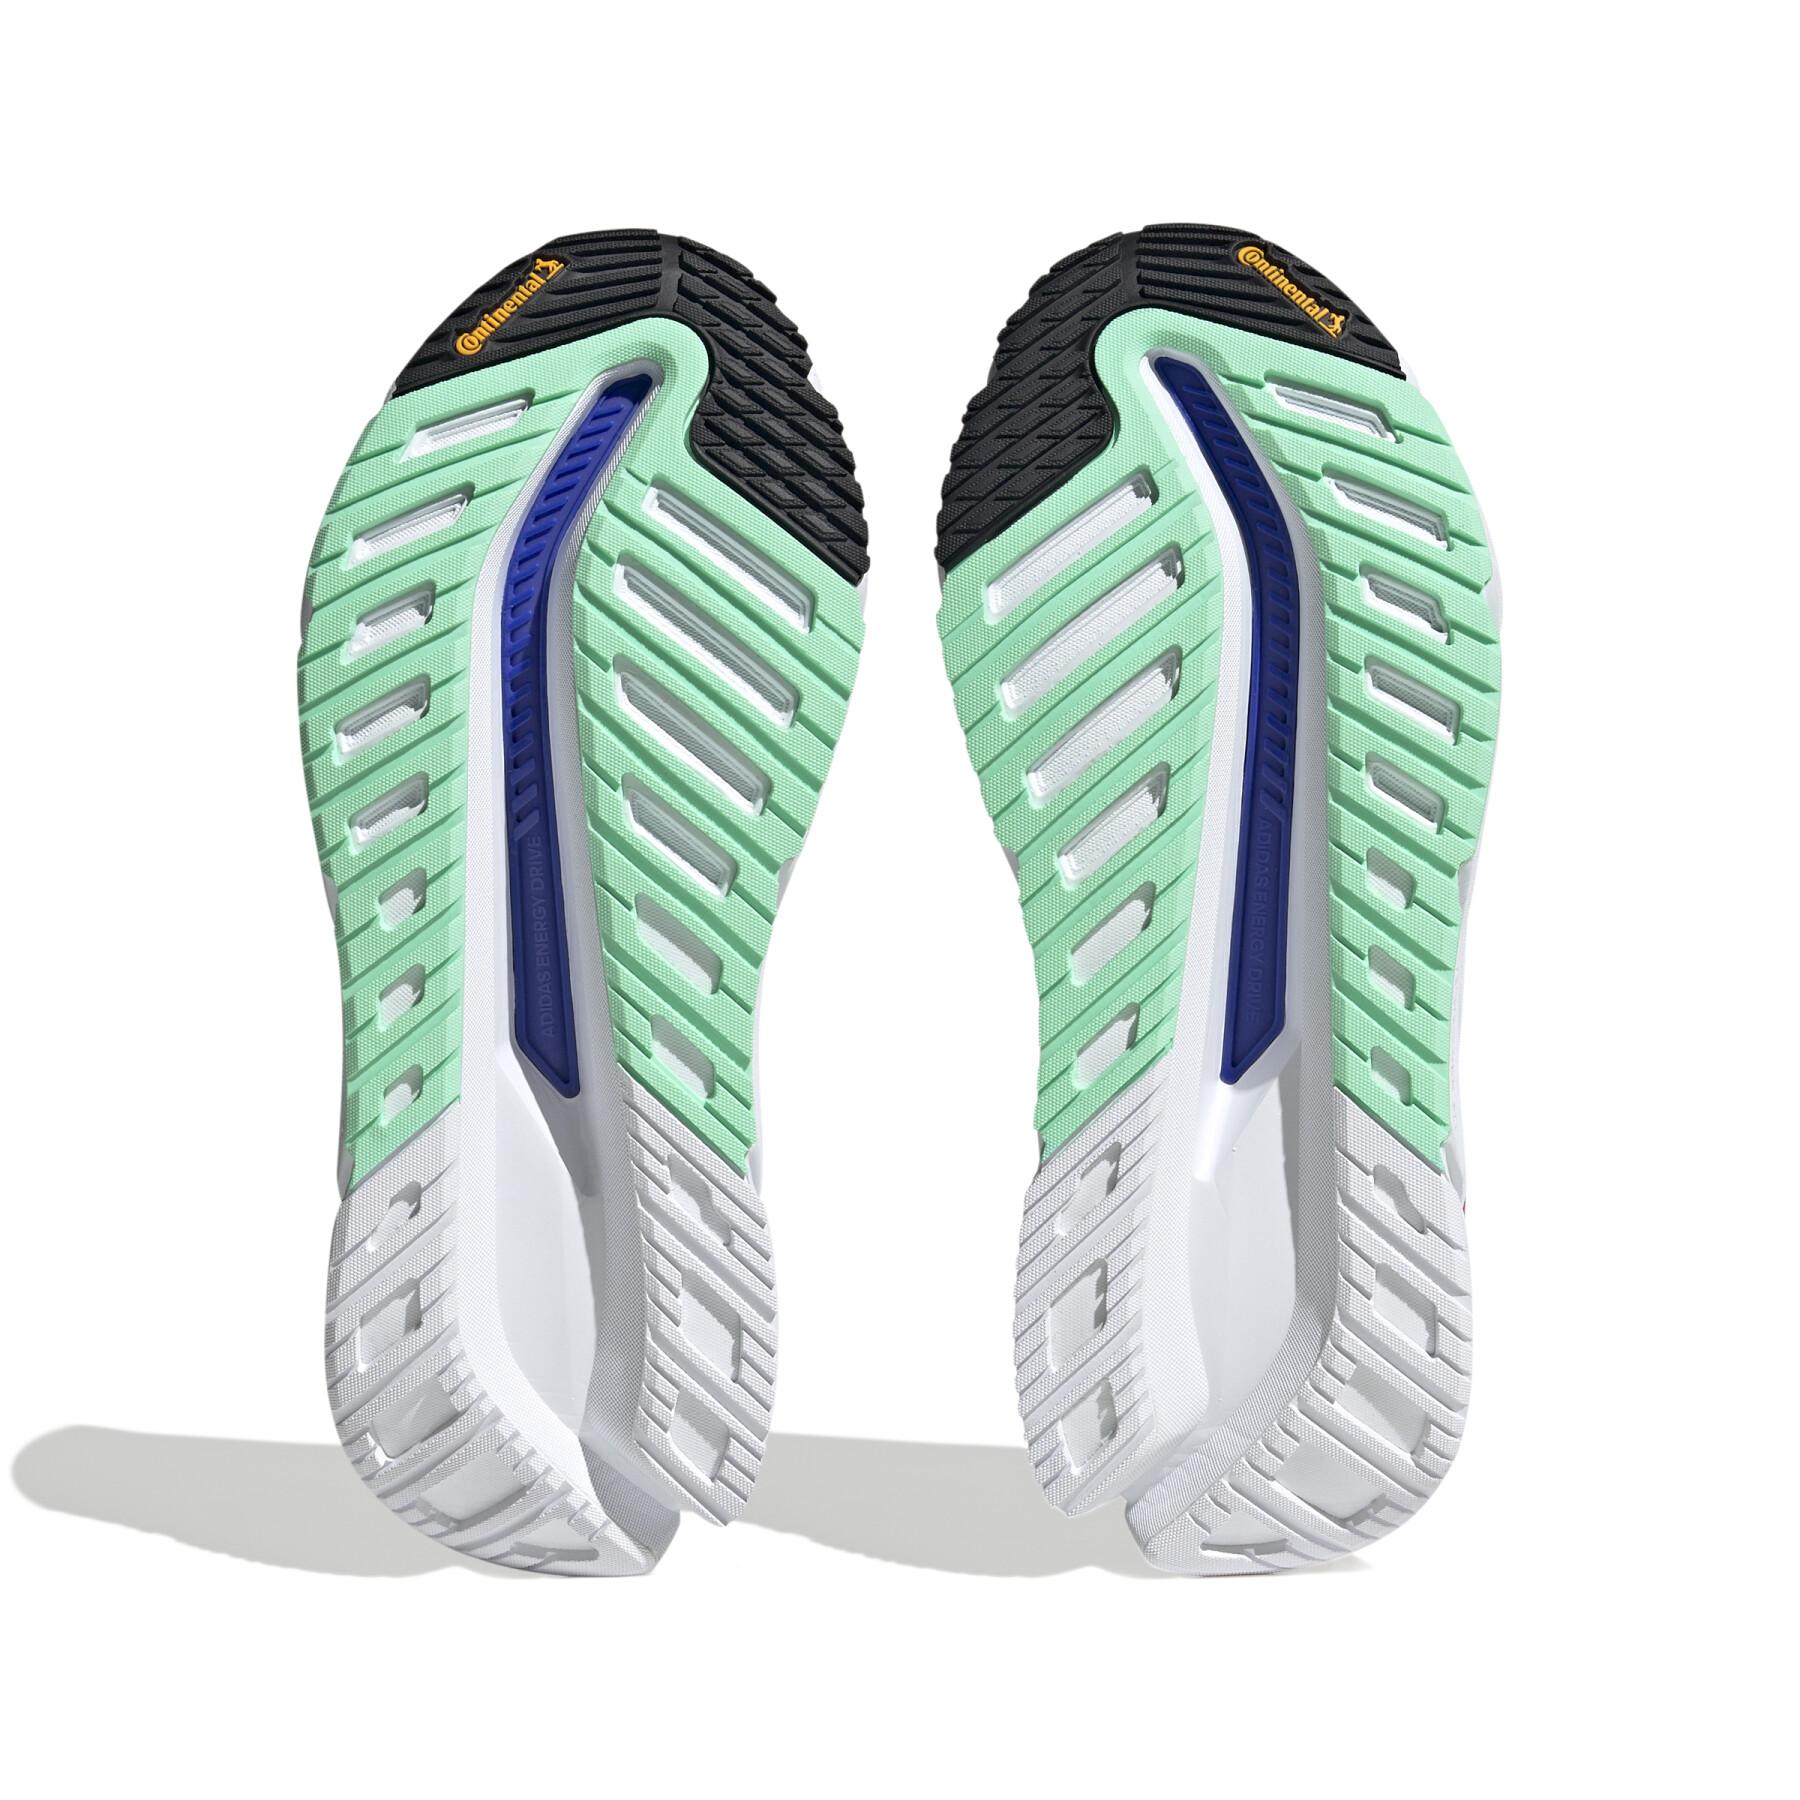 Sapatos de running adidas Adistar CS